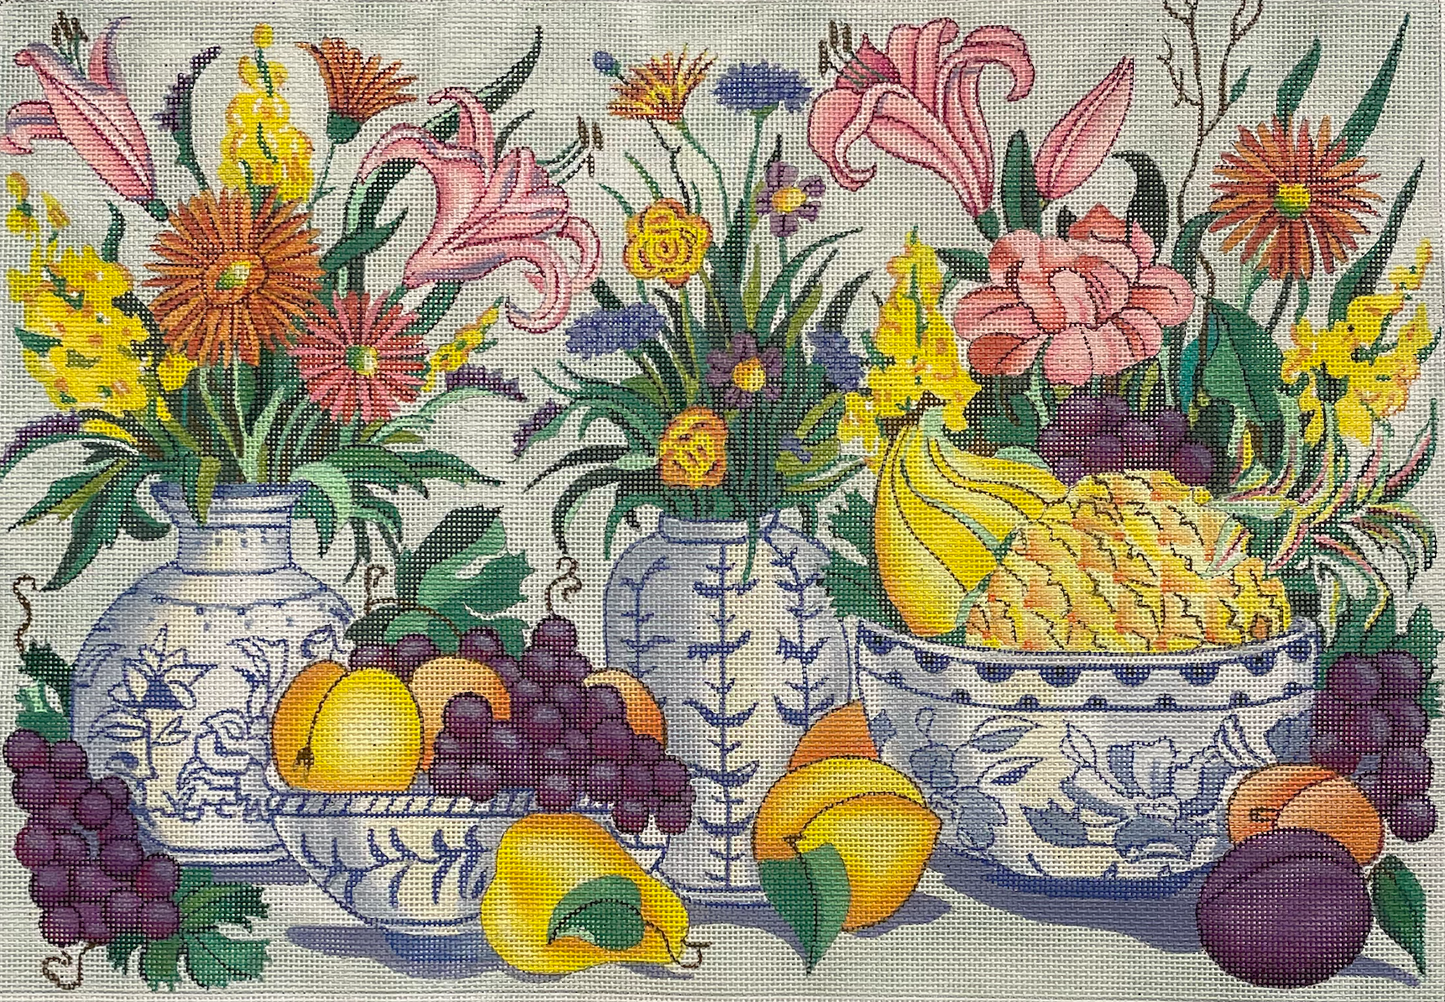 Fruit & Flowers